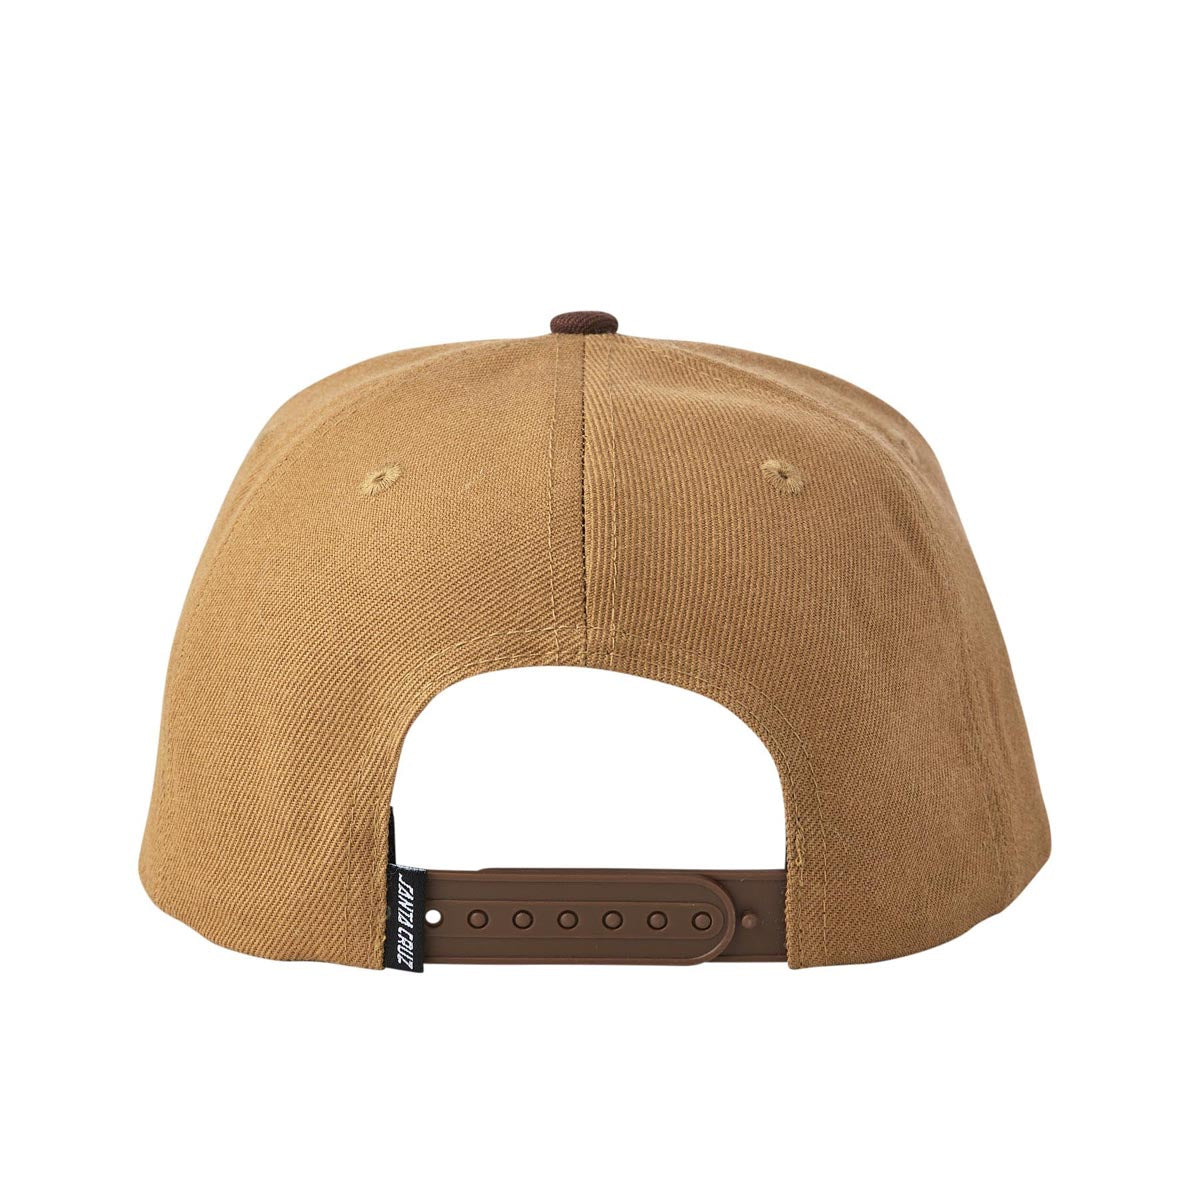 Santa Cruz Salba Tiger Snapback Hat - Khaki/Brown image 2